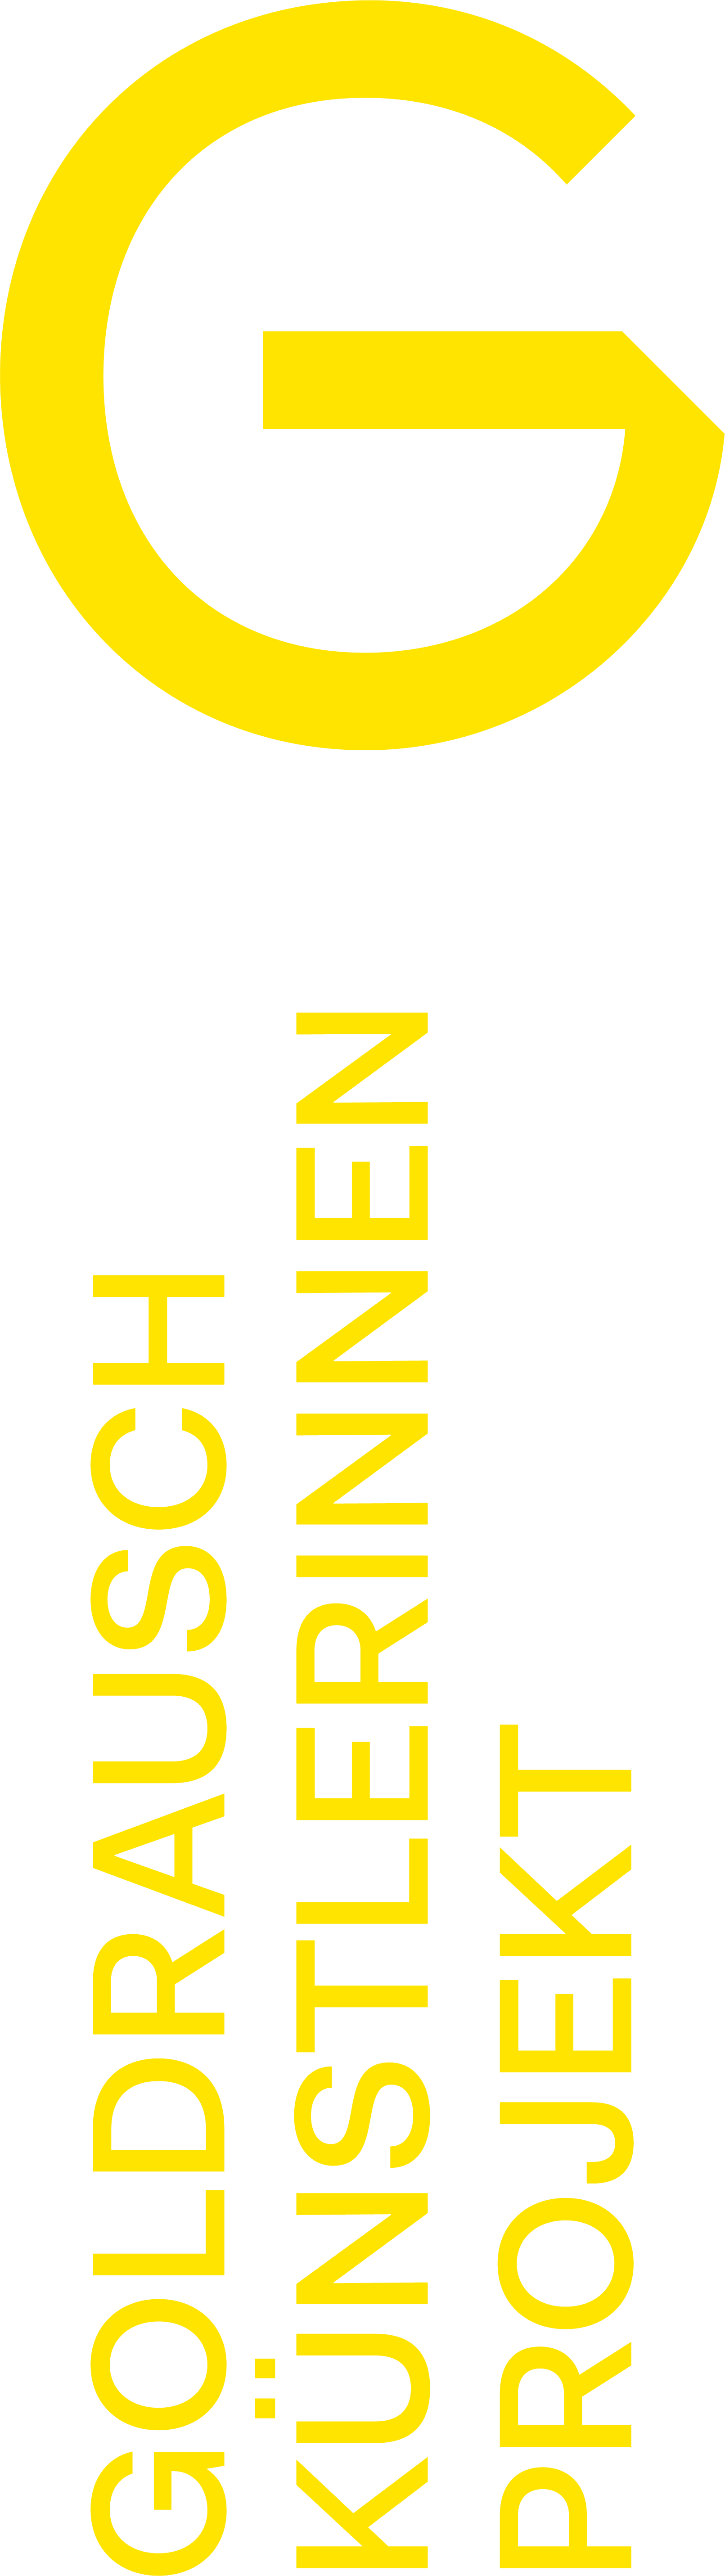 Goldrausch Künstlerinnenprojekt logo